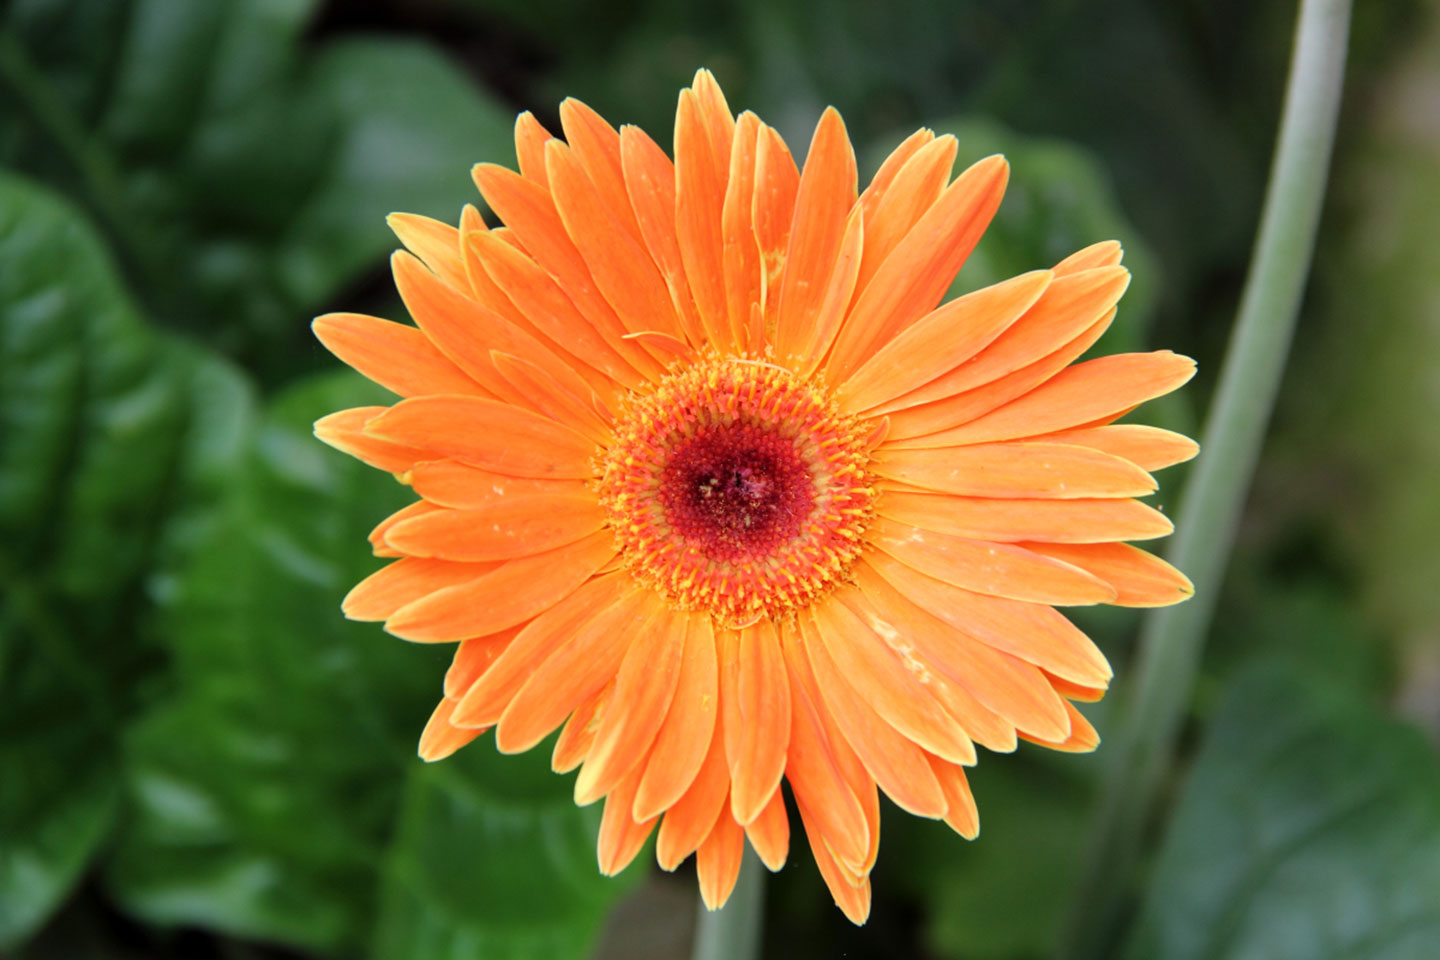 An orange Gerbera flower